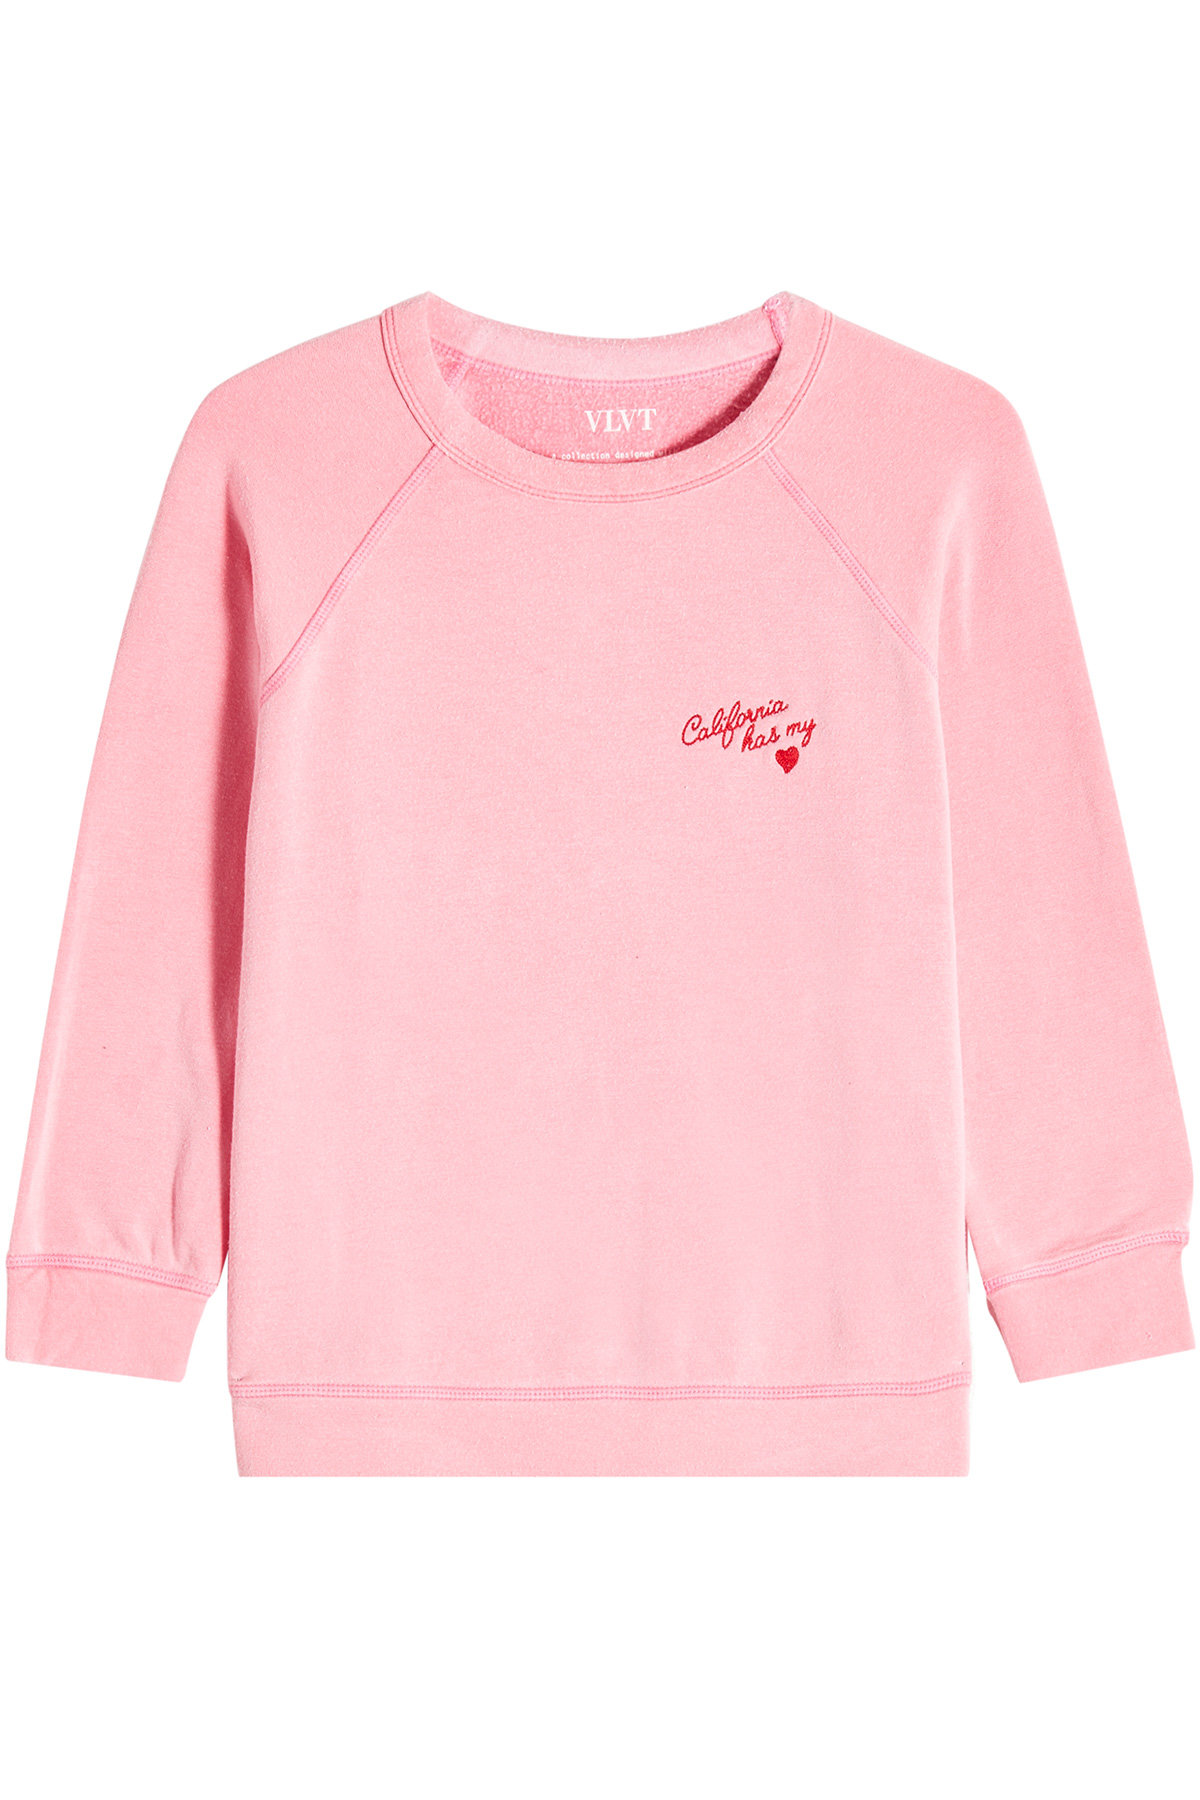 Marleigh Sweatshirt with Cotton by Velvet